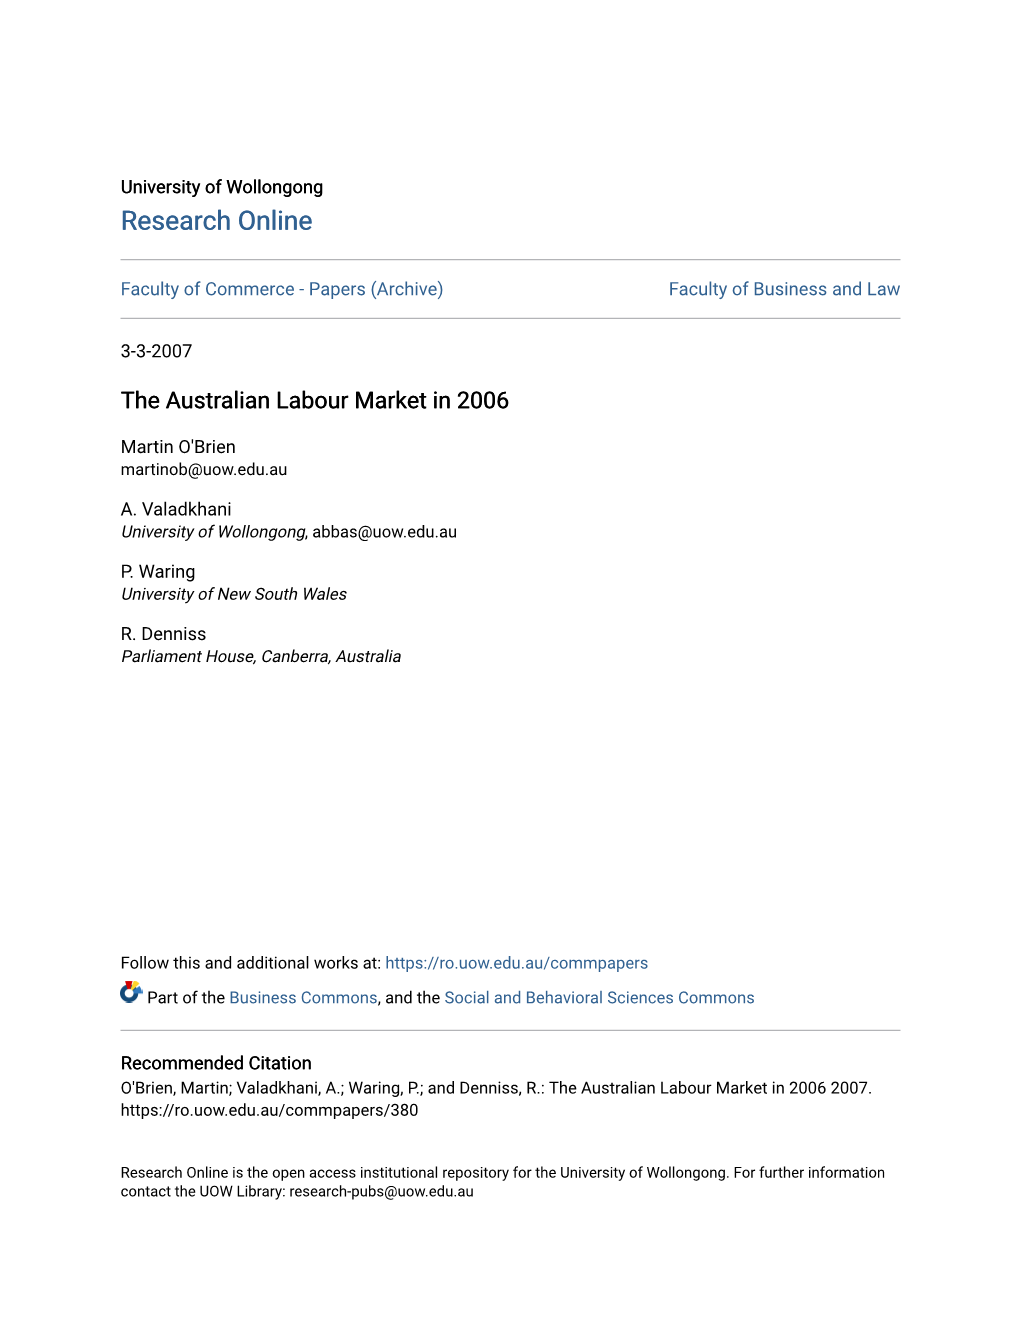 The Australian Labour Market in 2006